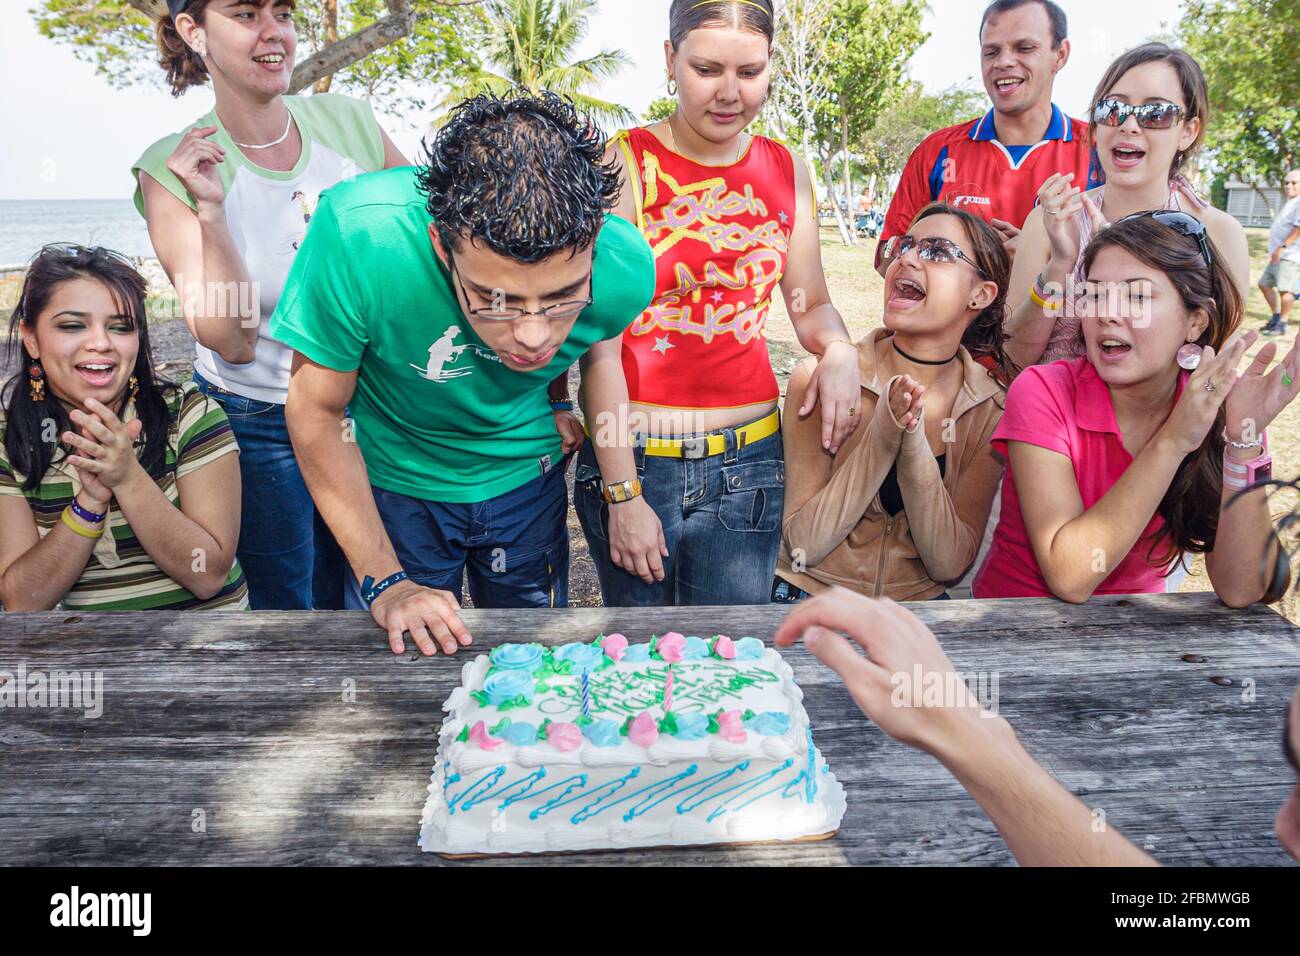 Miami Florida, Homestead Biscayne National Park, hispanische Studenten teenageralter Teenager Freunde Jungen Mädchen, feiern Geburtstagsfeier Kuchen ausblasen Kerze Stockfoto